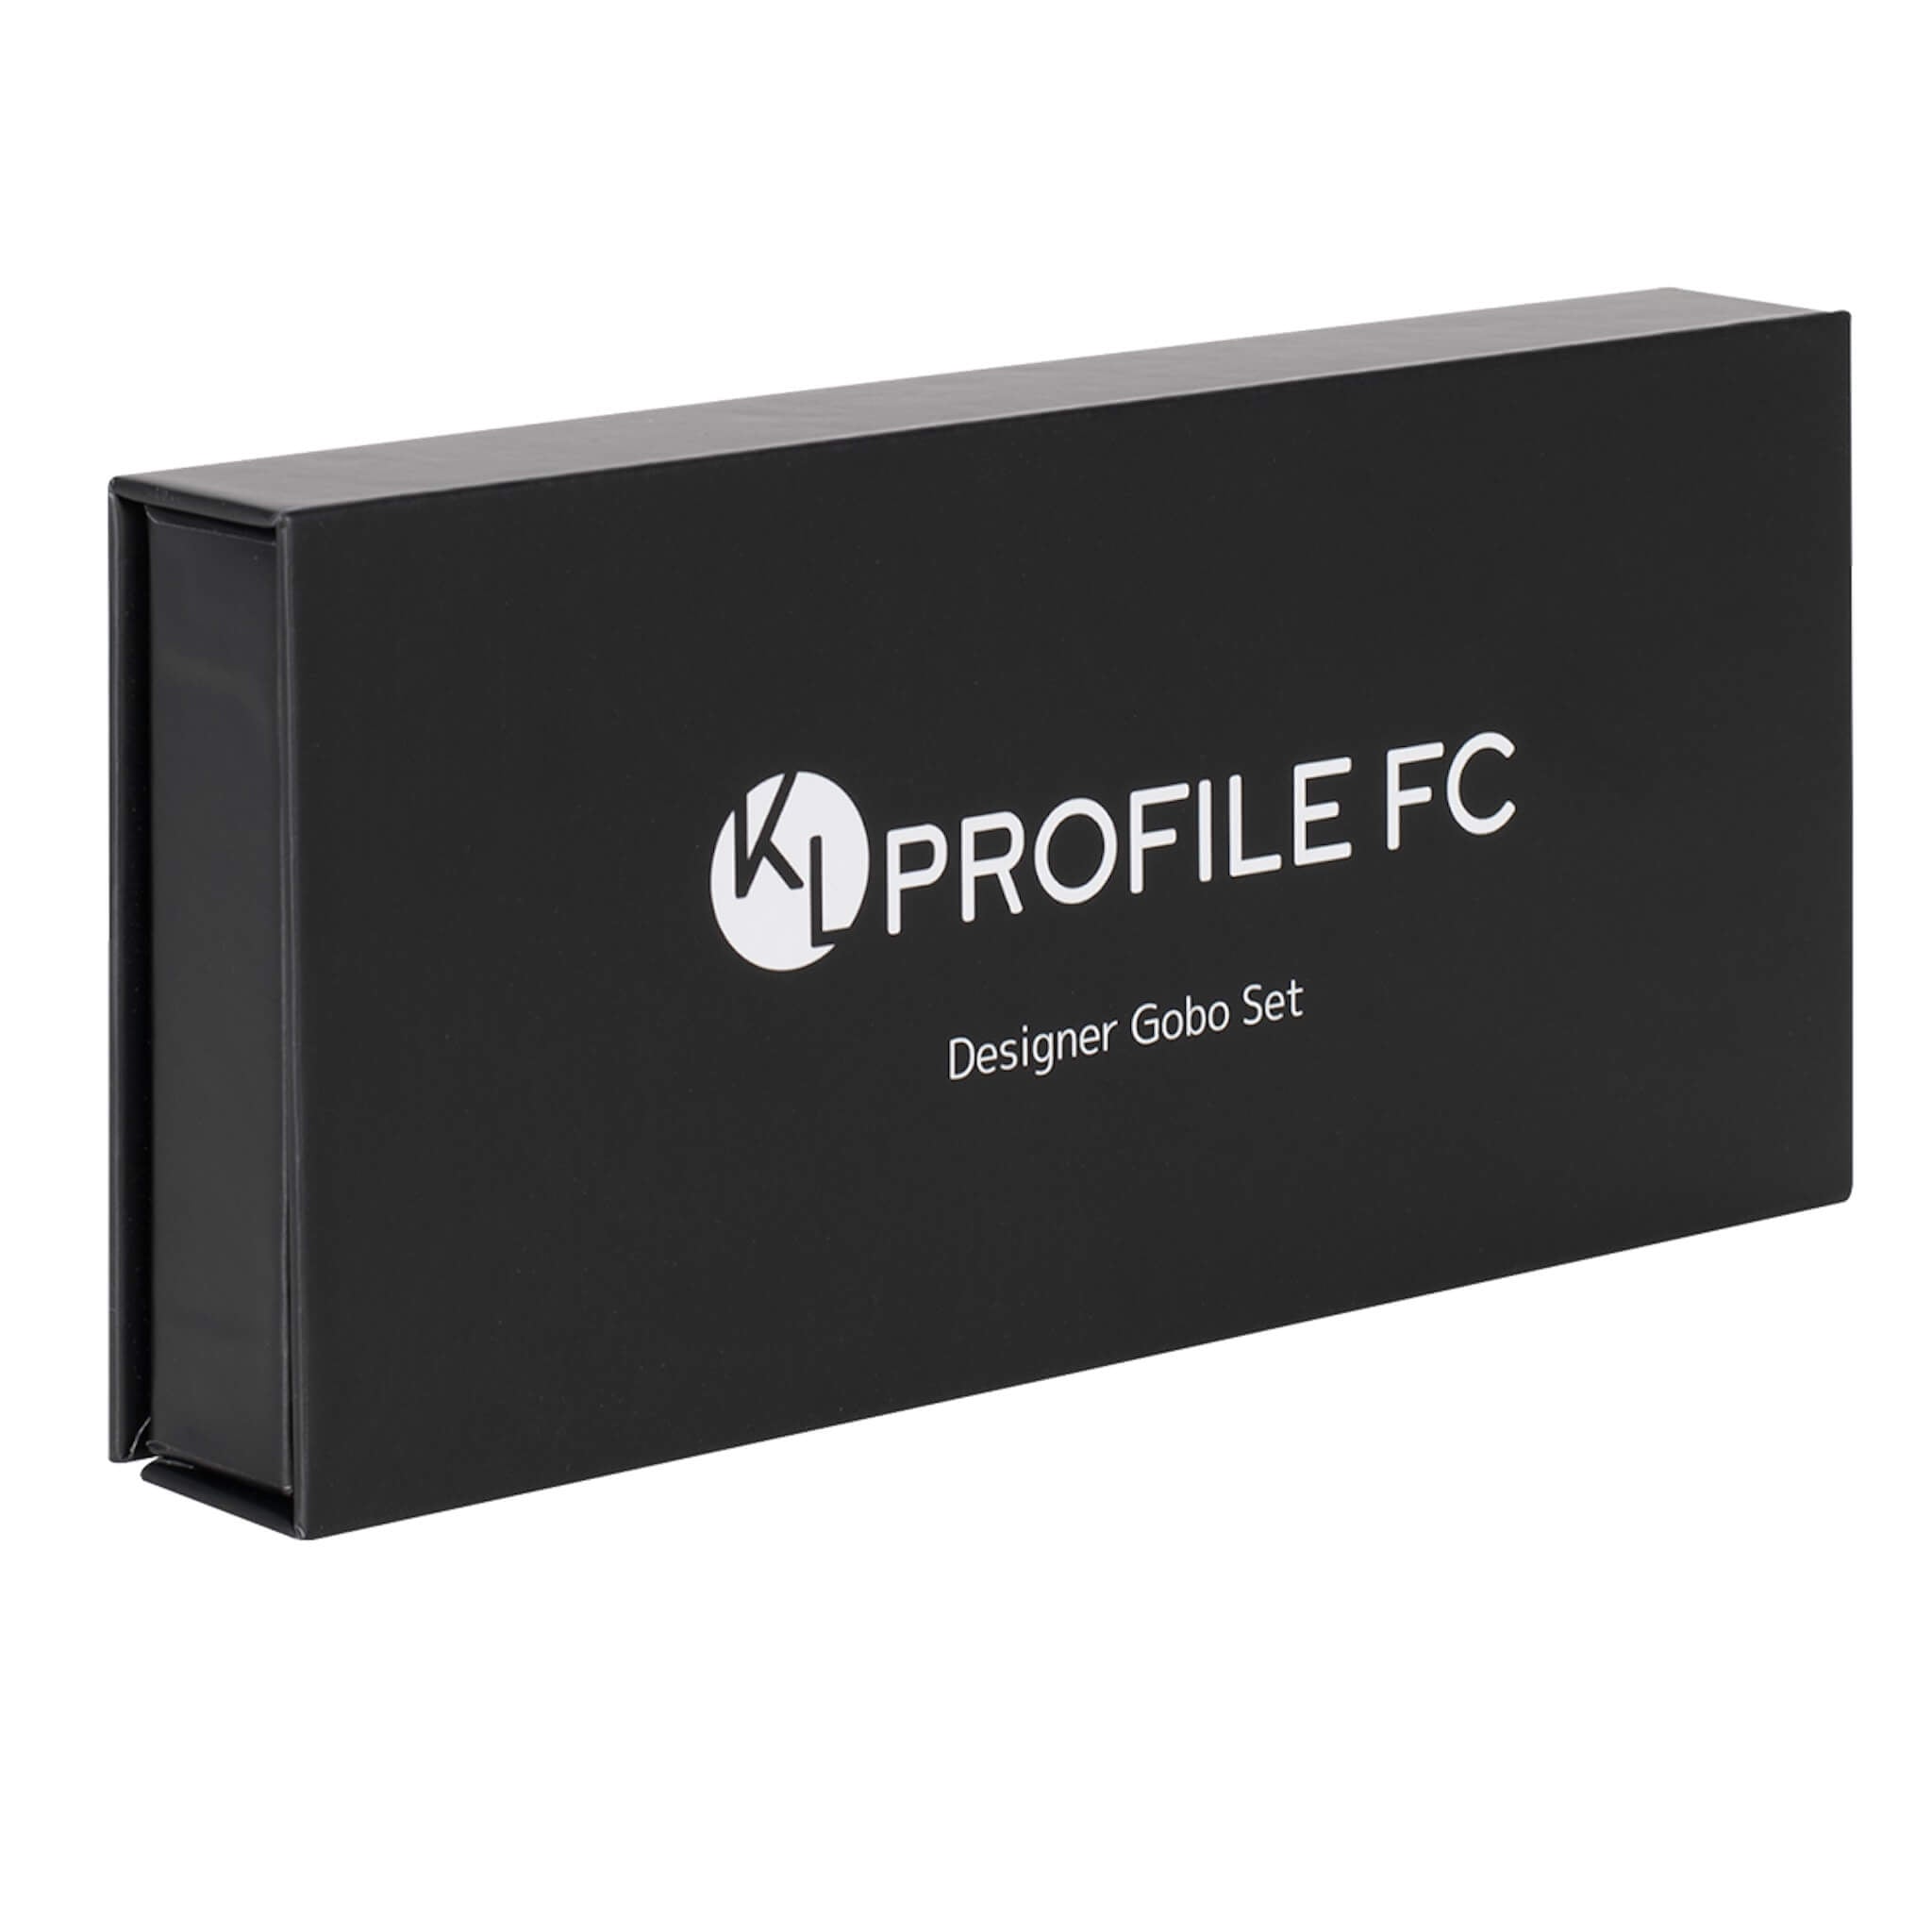 Elation KL Profile FC WH - 350W Compact LED Ellipsoidal Fixture, gobo box